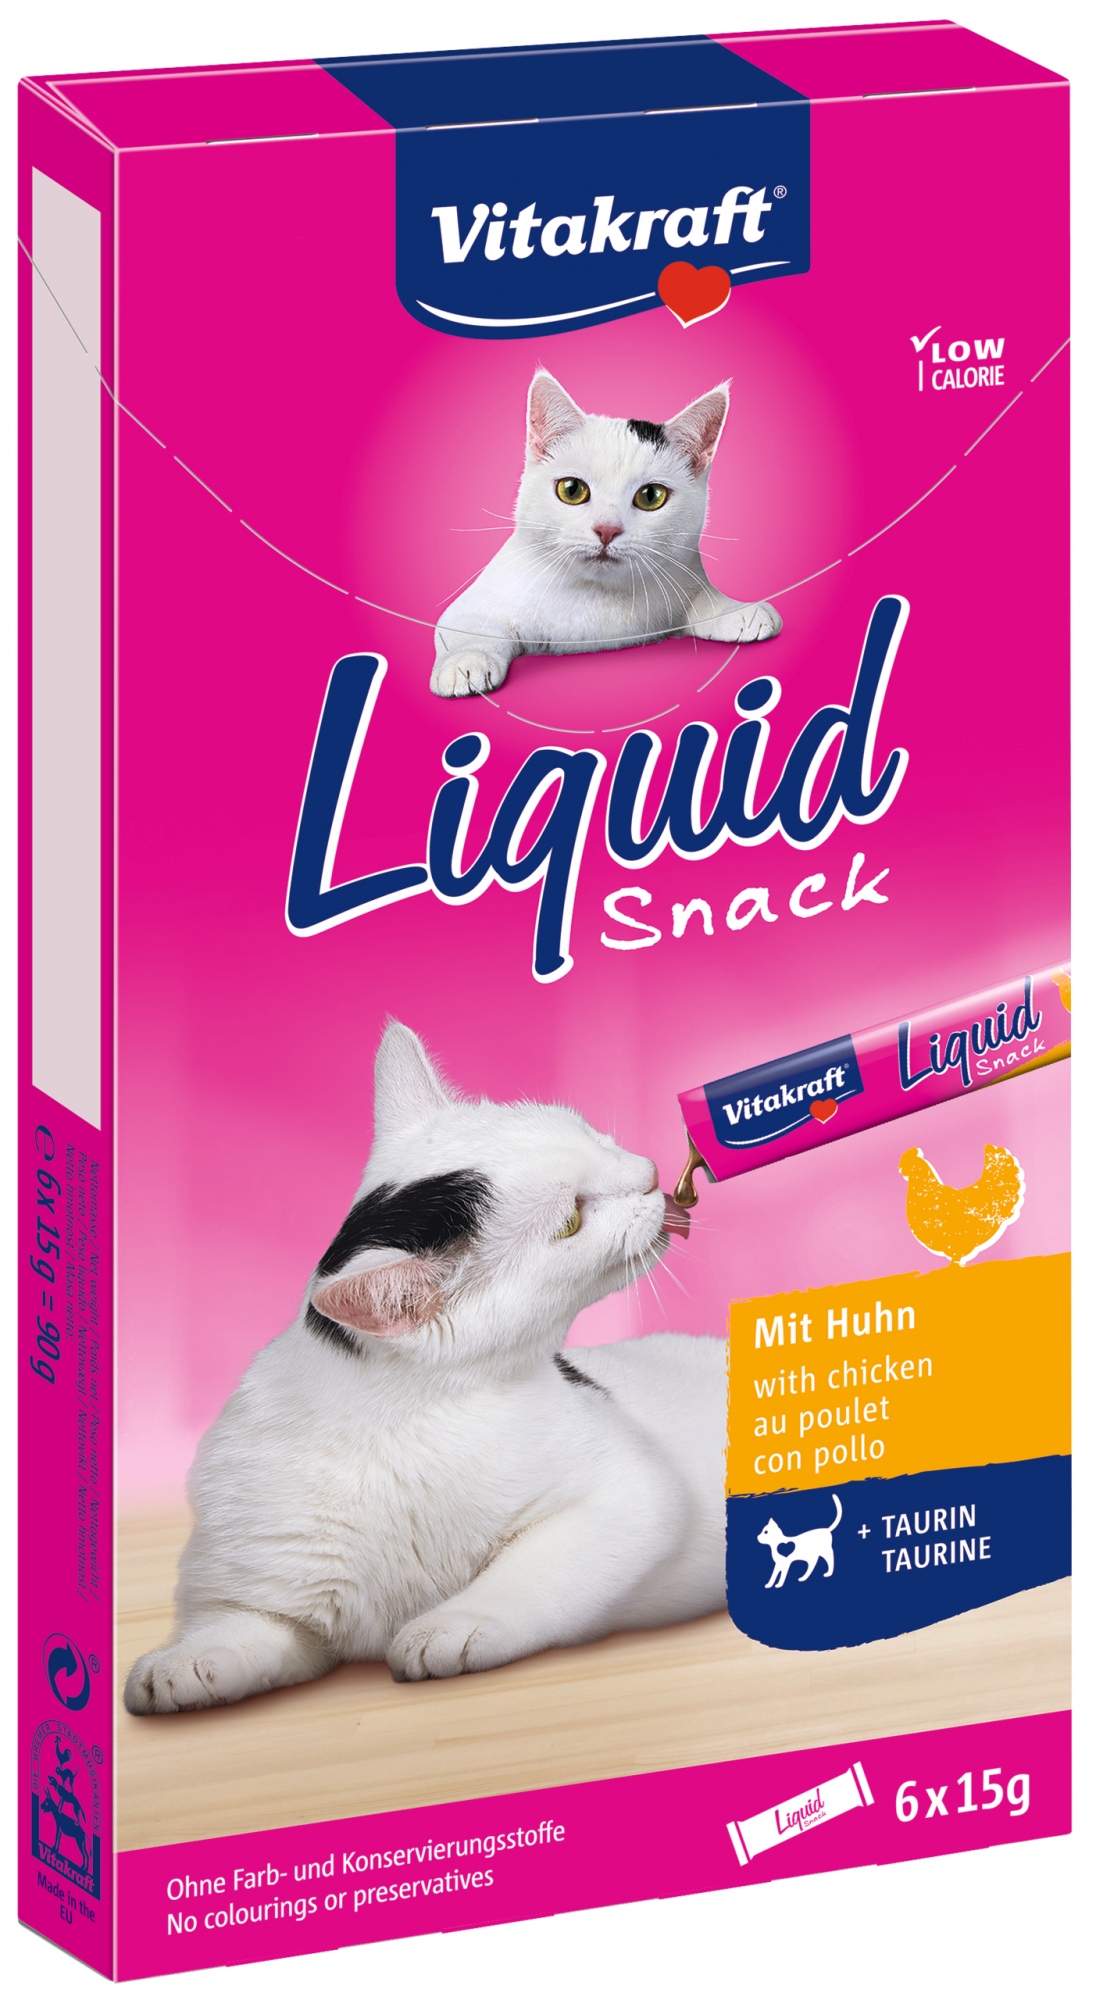 Vitakraft Liquid Snack Katzenleckerli - verschiedene Geschmacksrichtungen